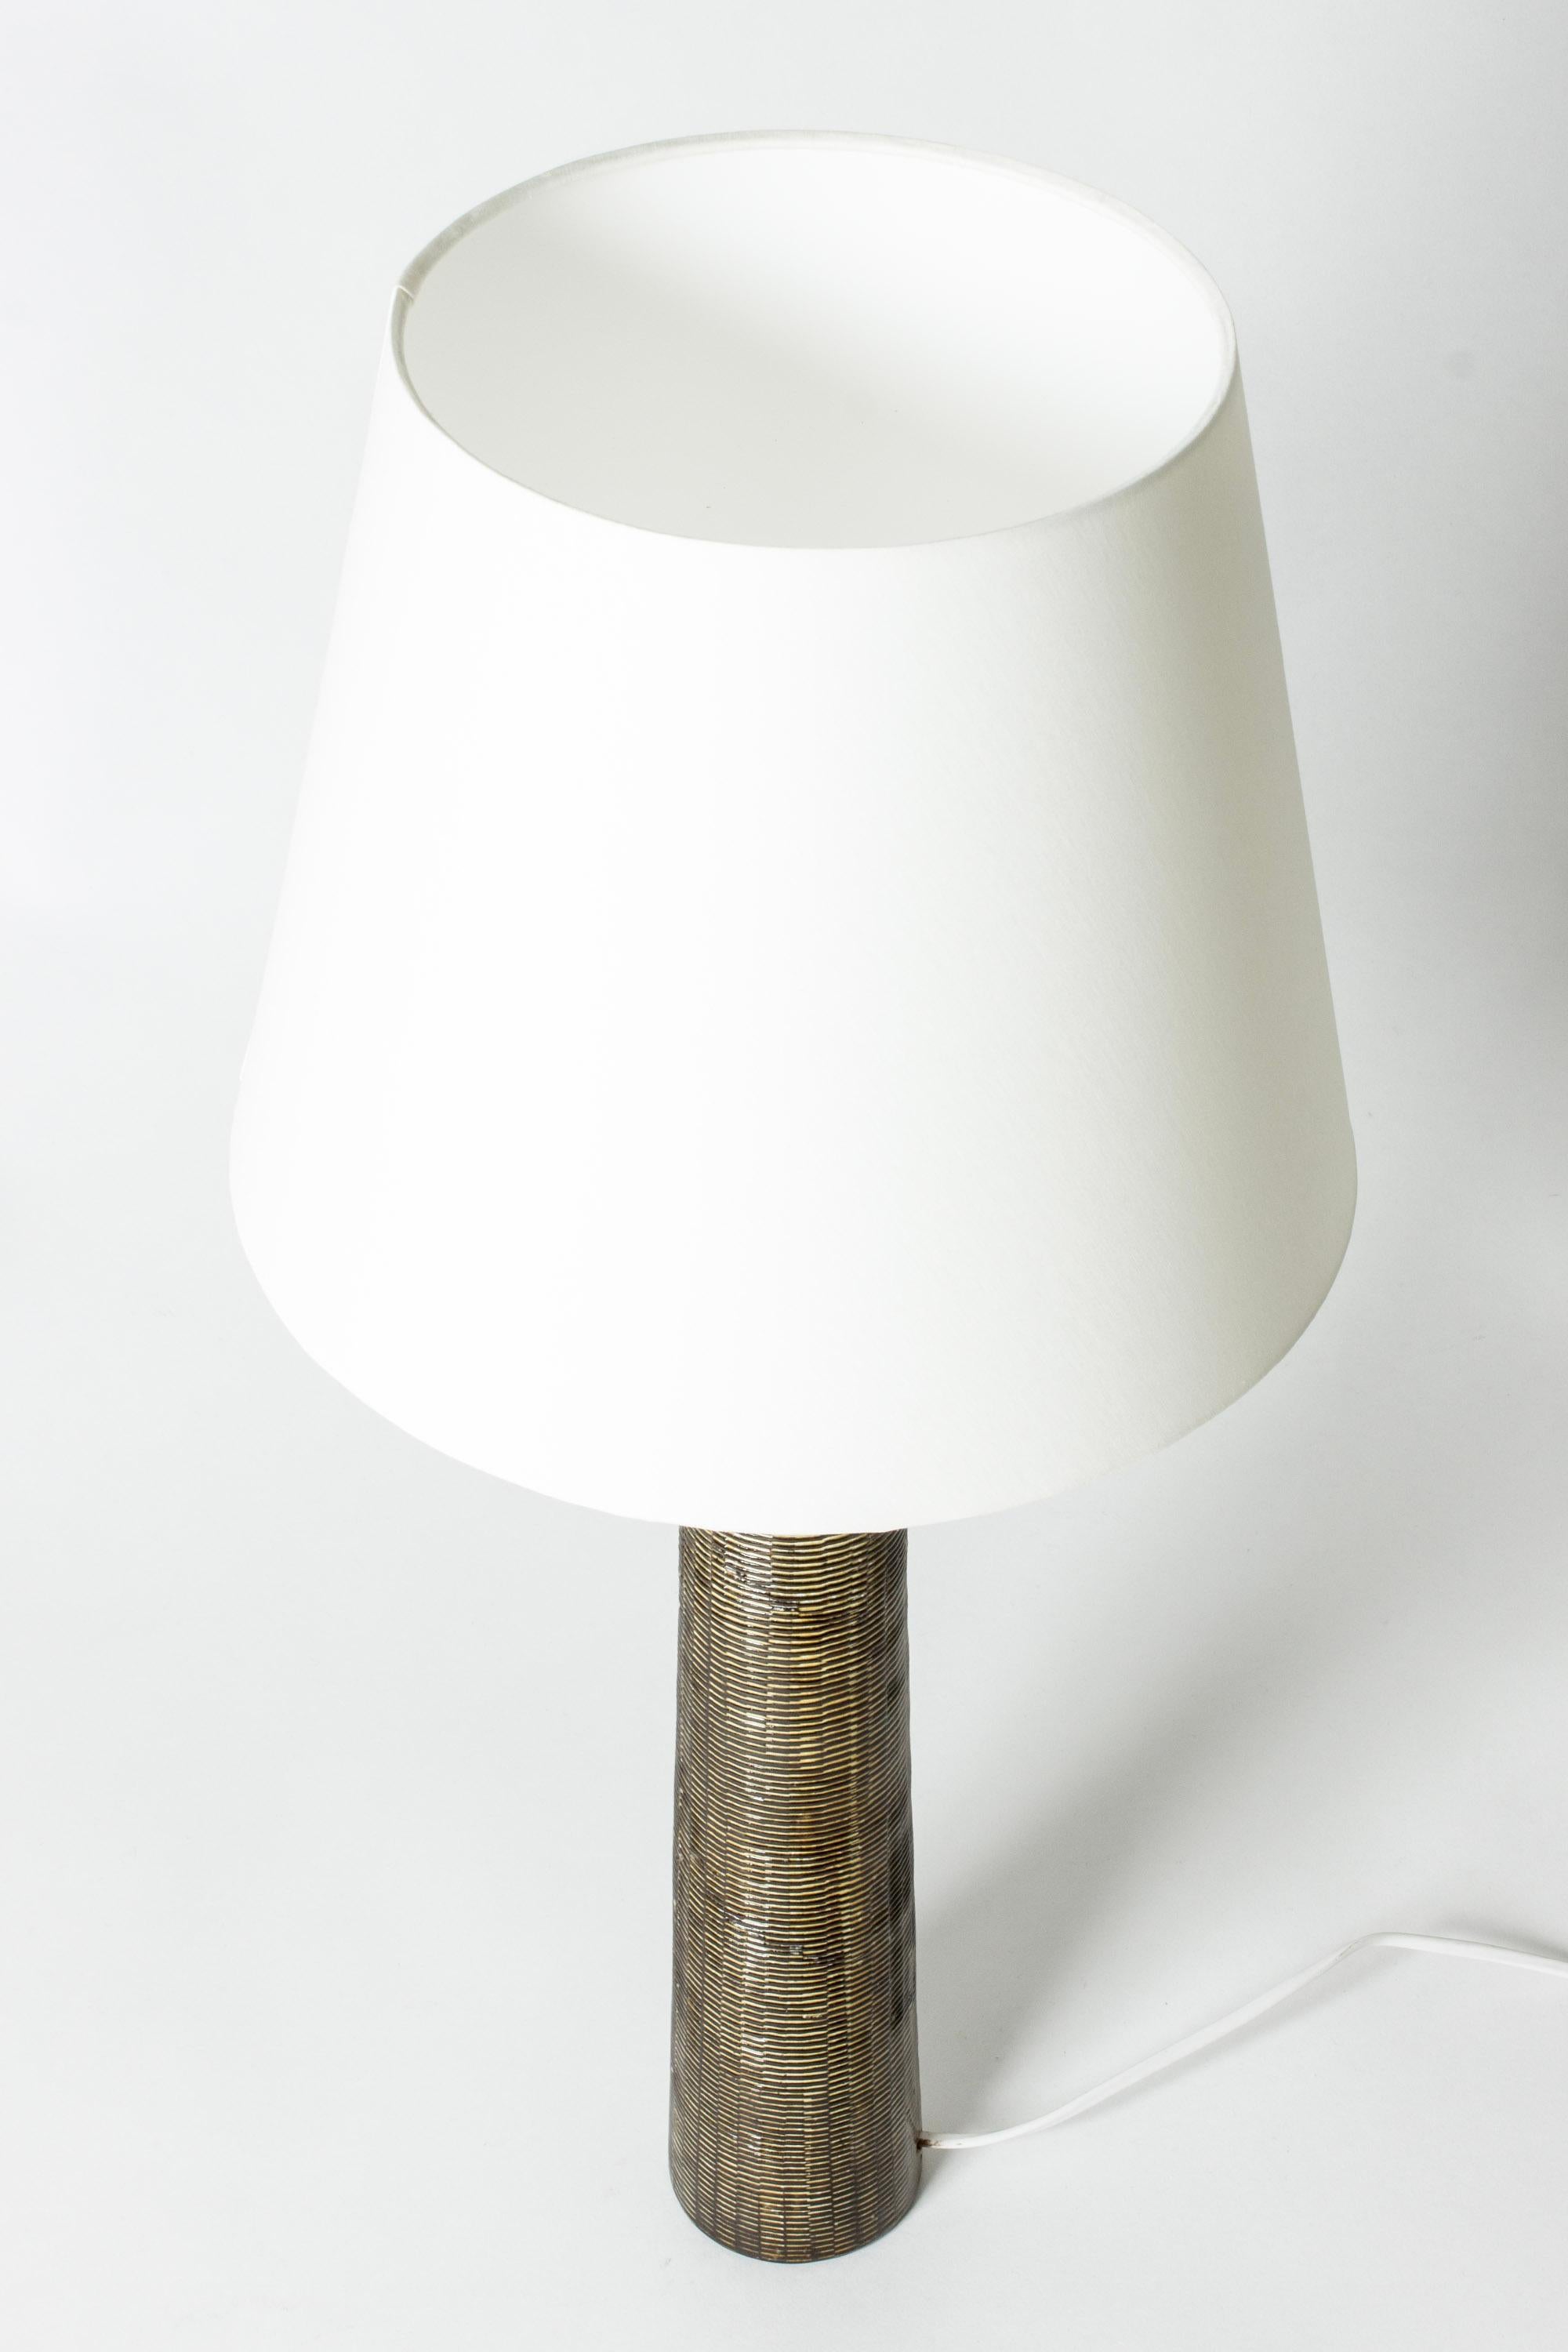 Mid-20th Century Midcentury Ceramic Table lamp by Ingrid Atterberg, Upsala Ekeby, Sweden, 1950s